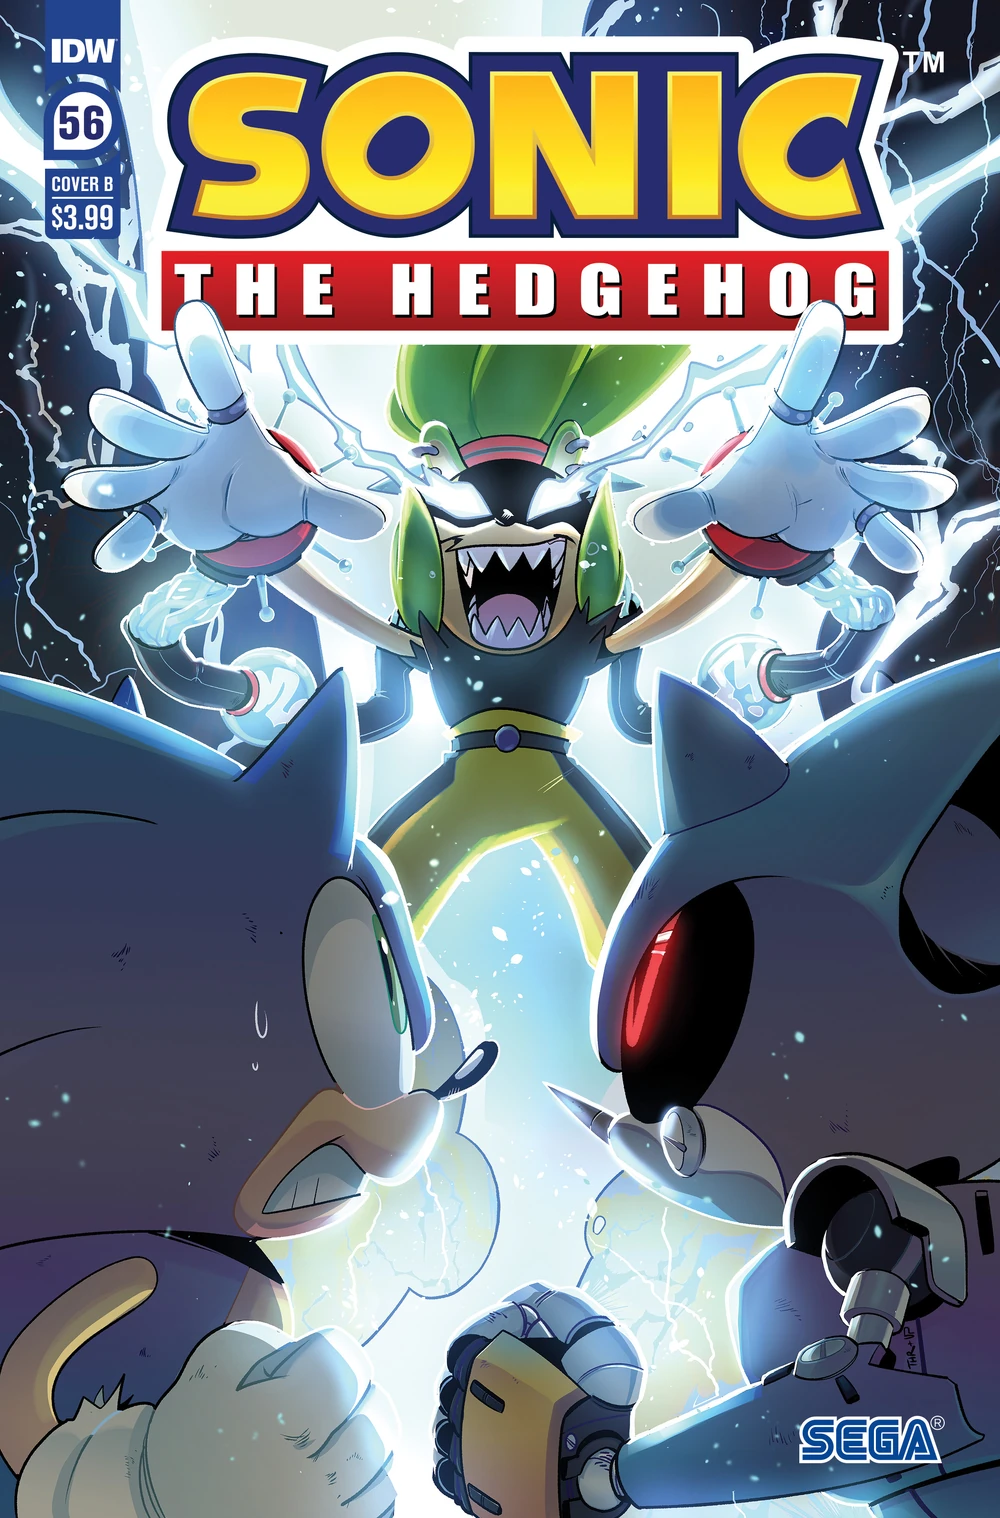 Sonic The Hedgehog #56 Cover B